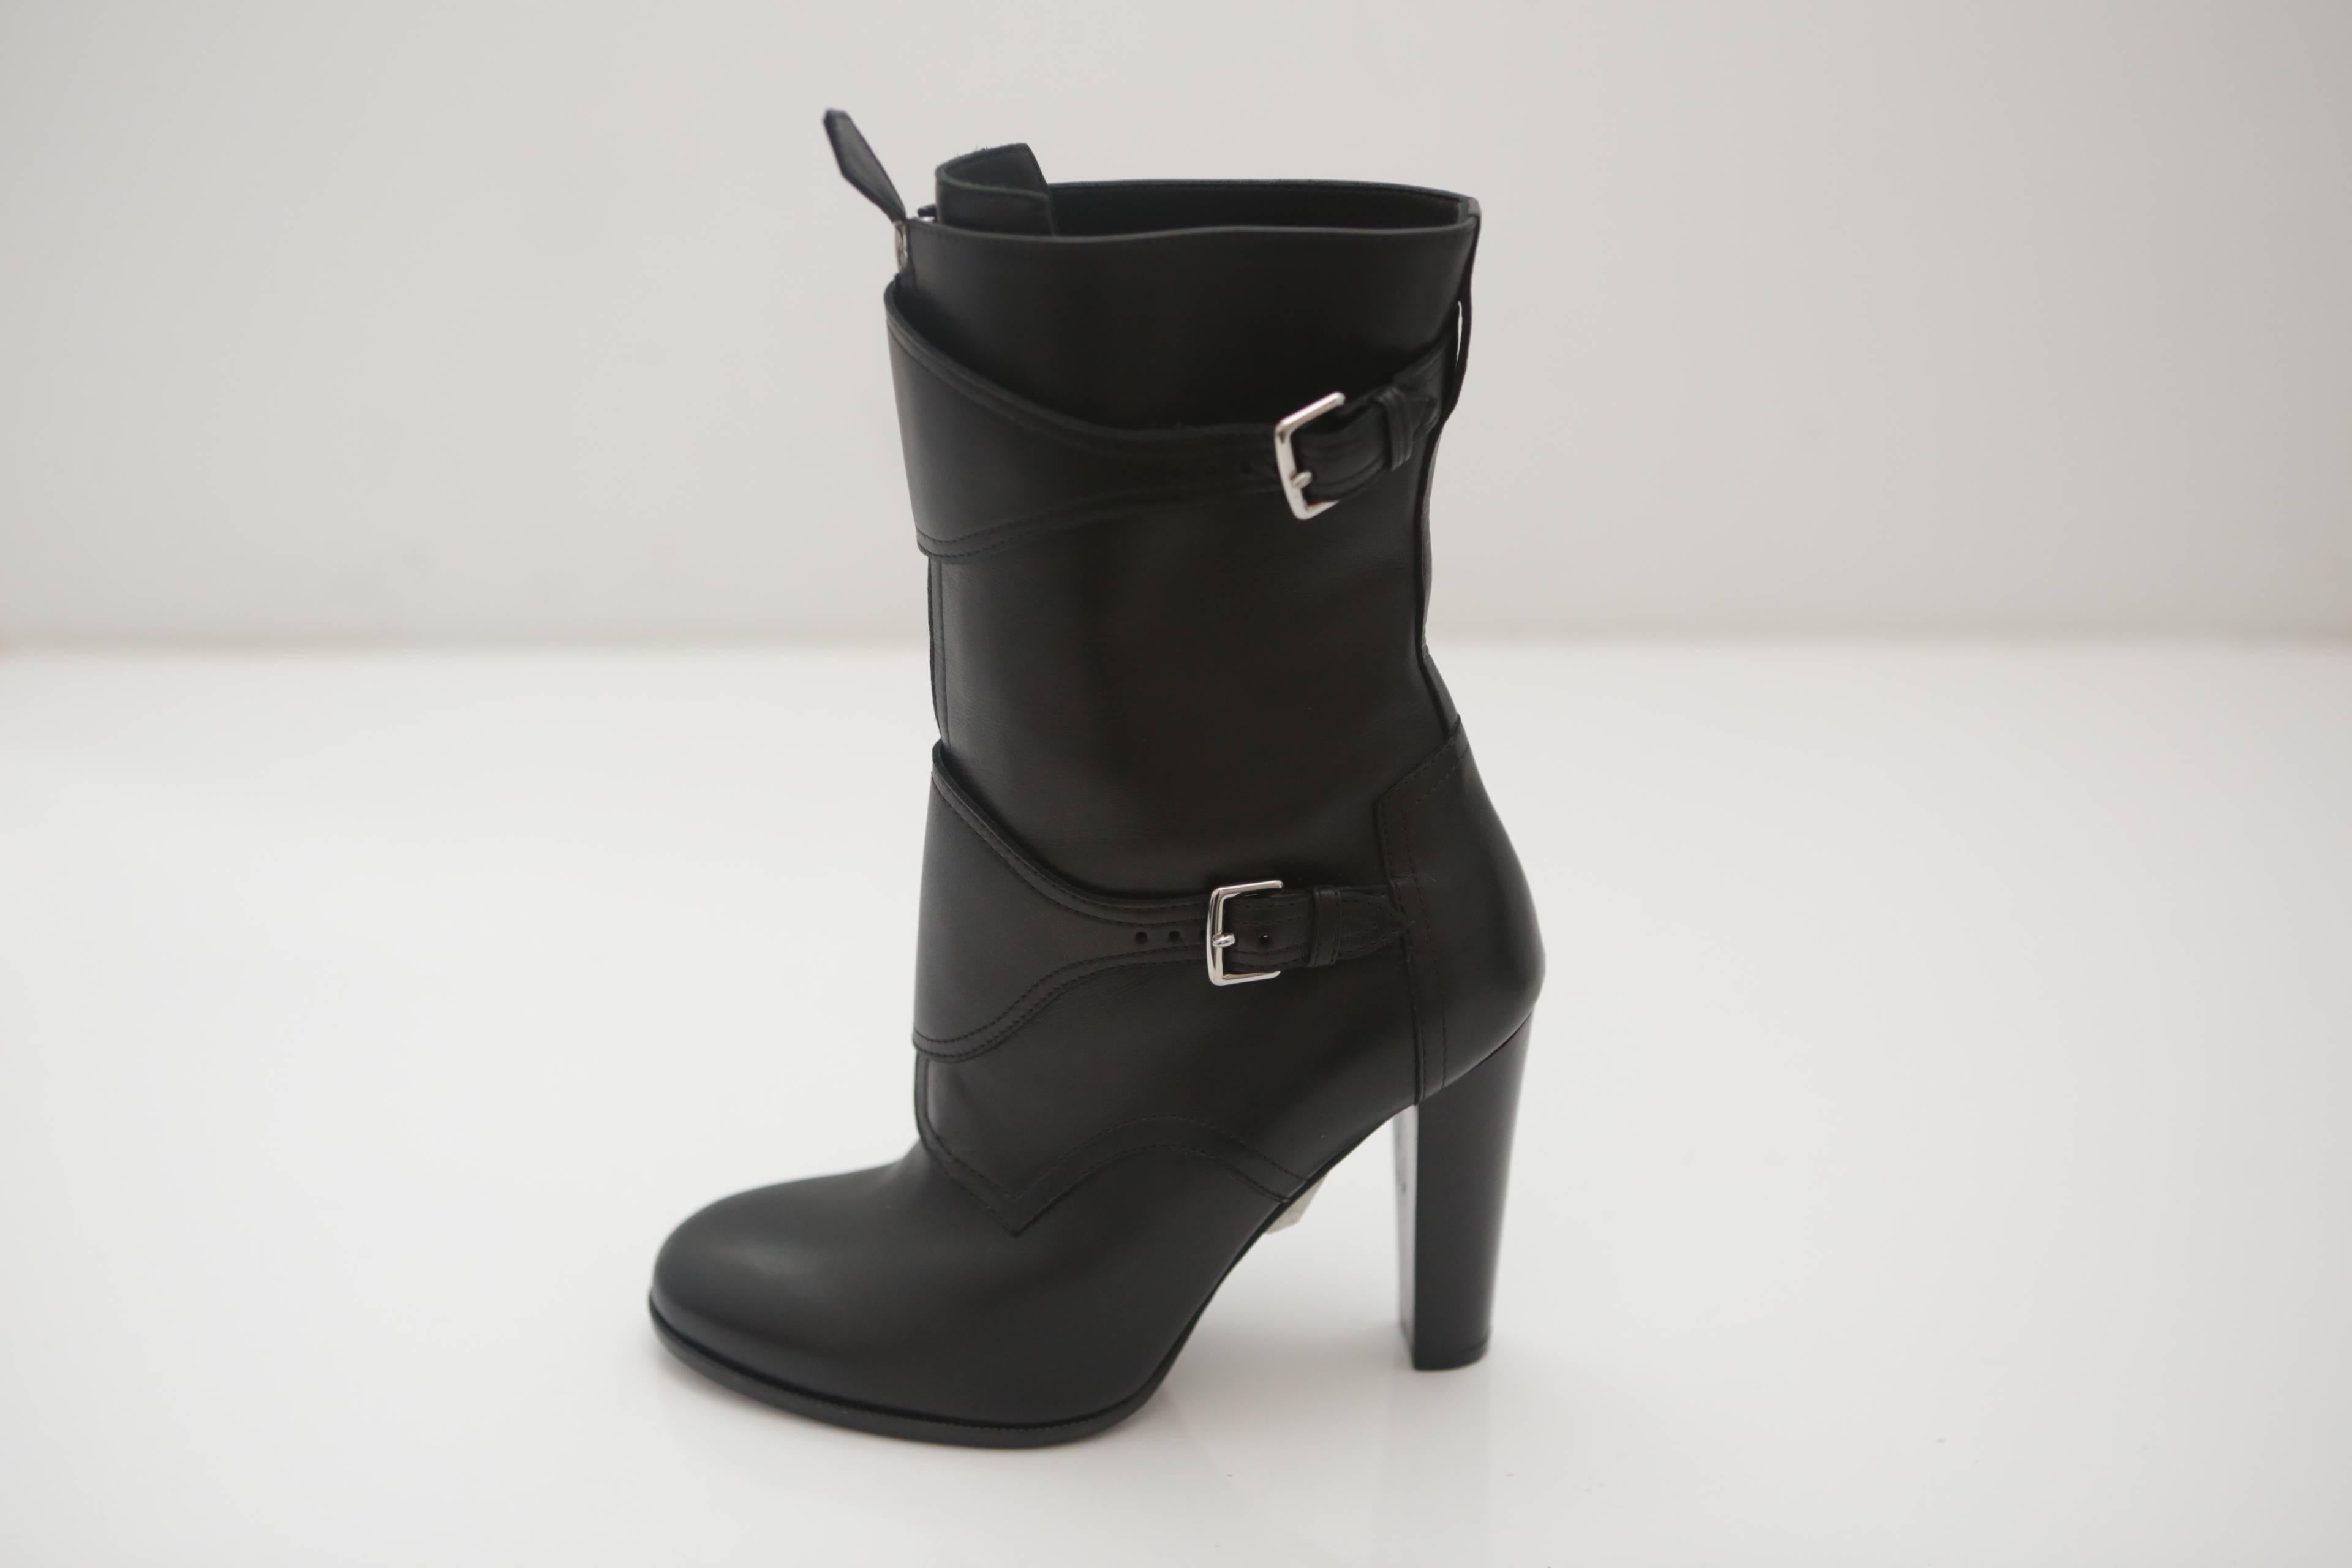 Bottega Venetta black suede boots with 4